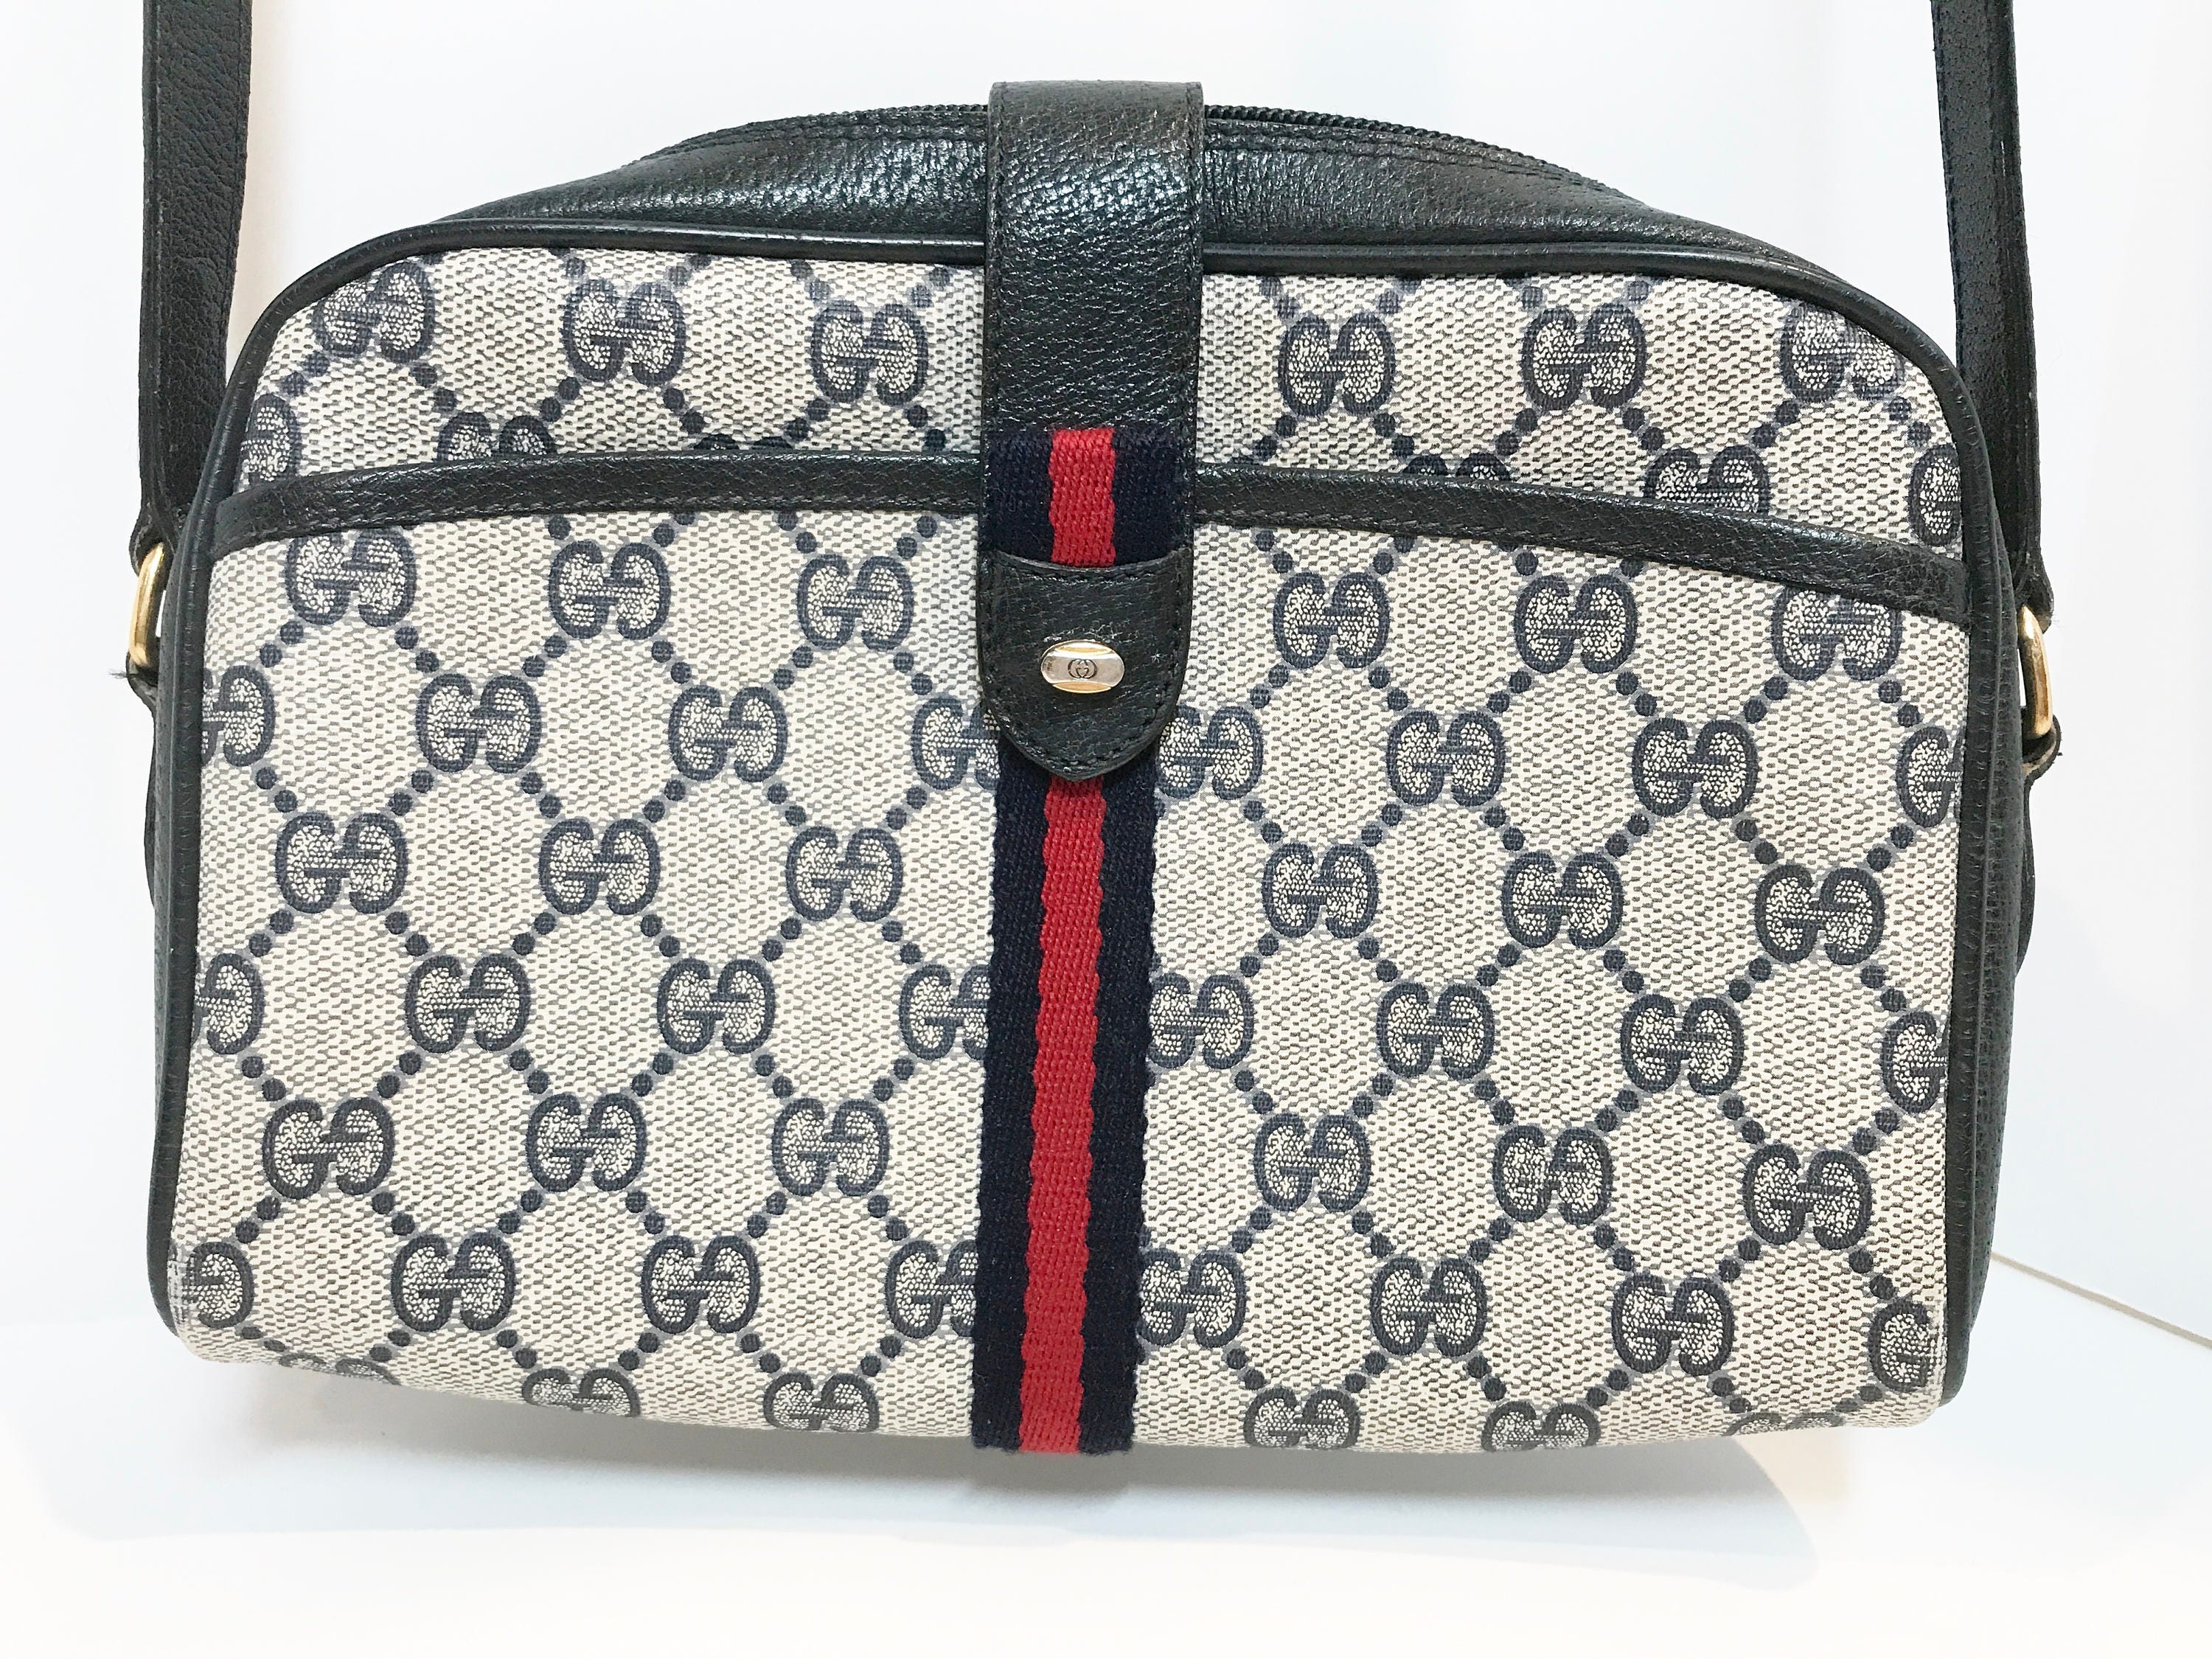 Authentic Gucci Bag, Classic Gucci Purse, Navy Leather Gucci Handbag ...